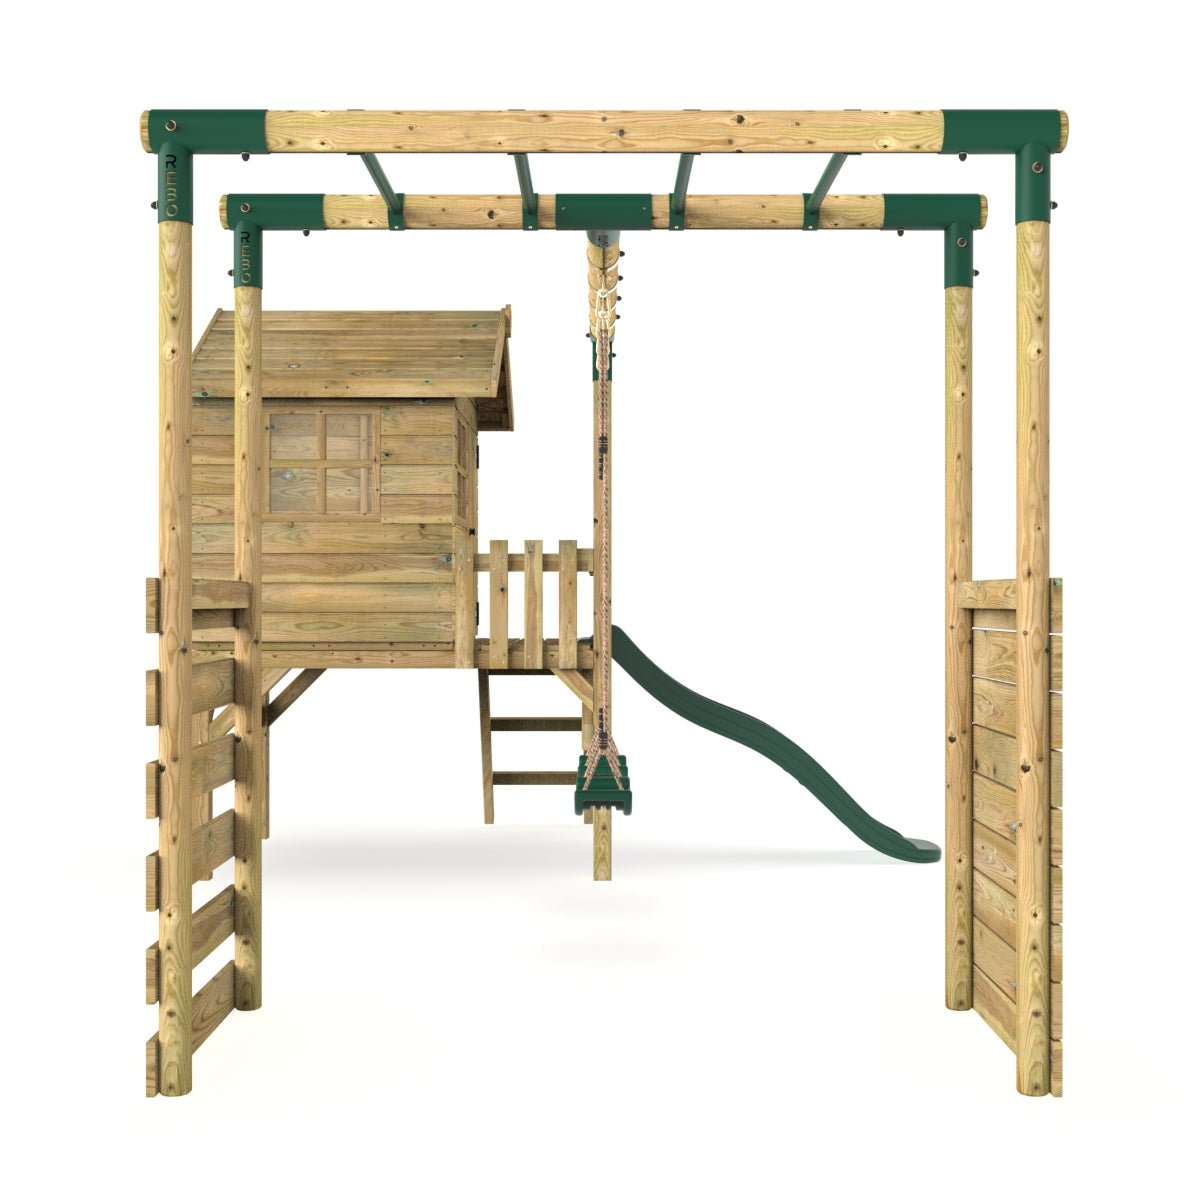 Rebo Orchard 4FT Wooden Playhouse, Swings, Monkey Bars, Deck & 6FT Slide – Venus Green